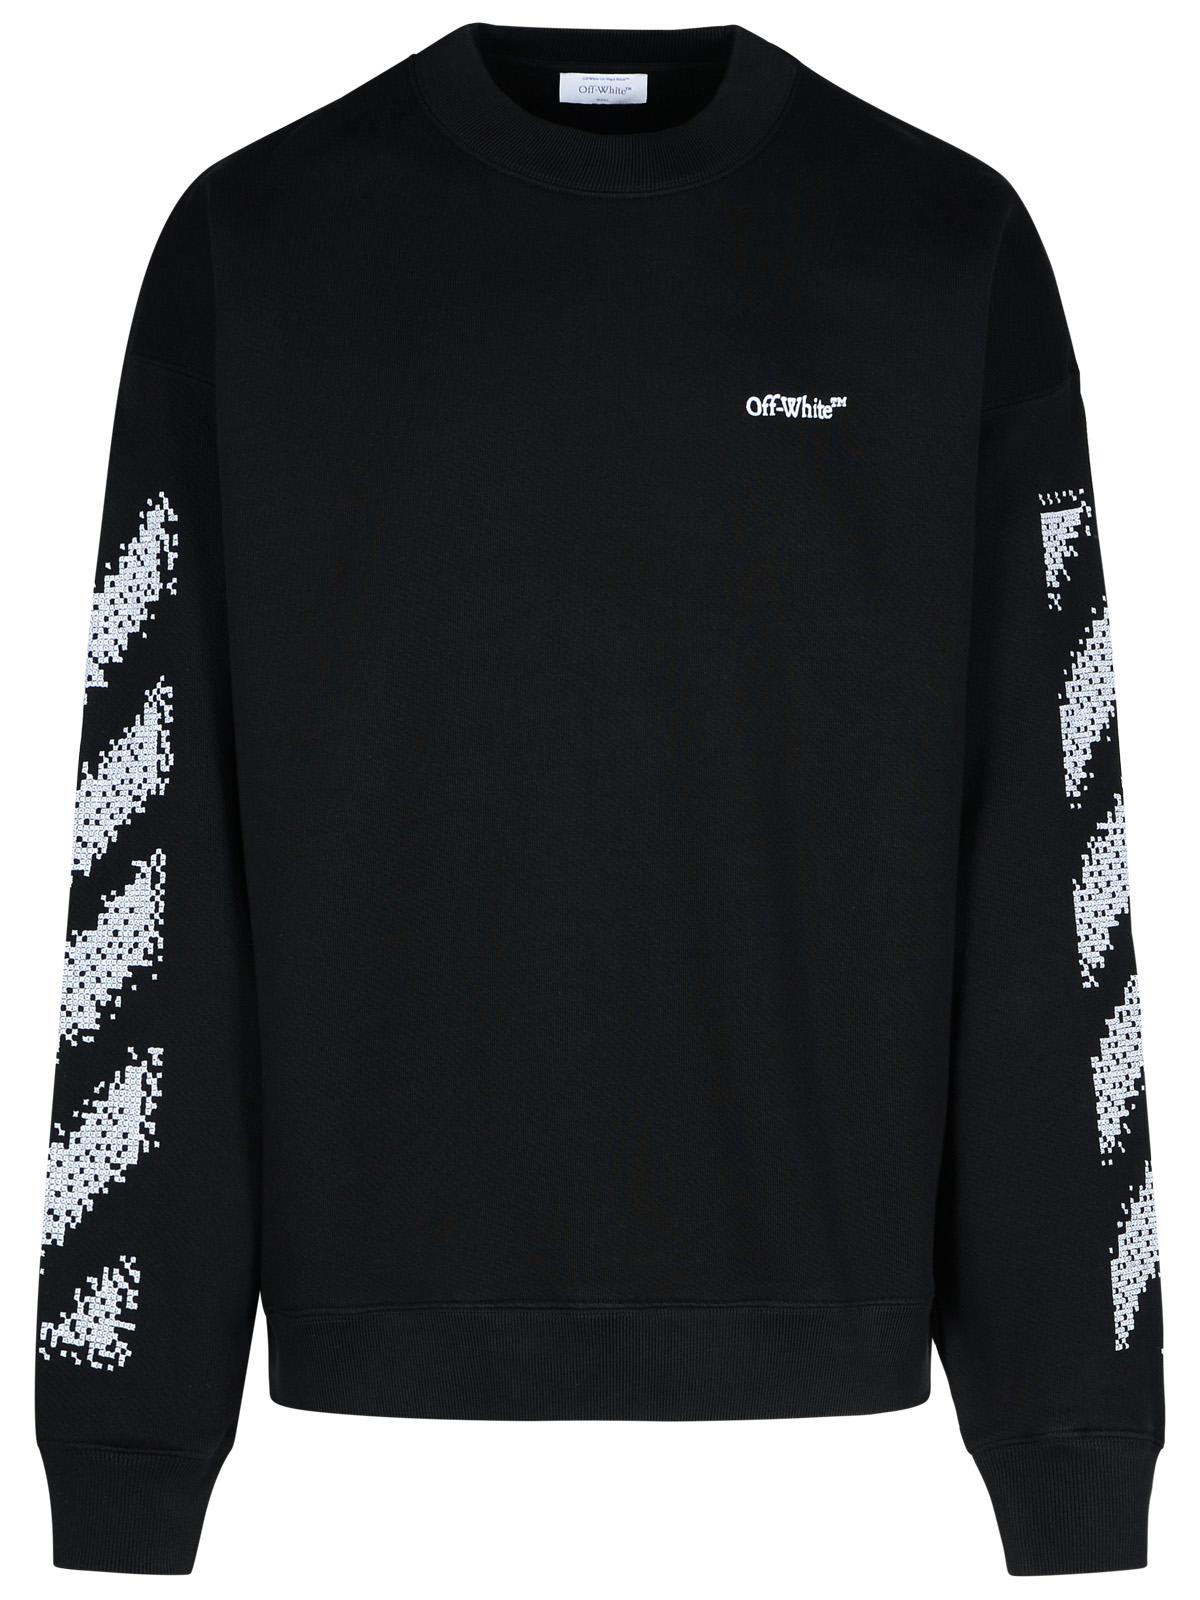 pixel Skate Black Cotton Sweatshirt